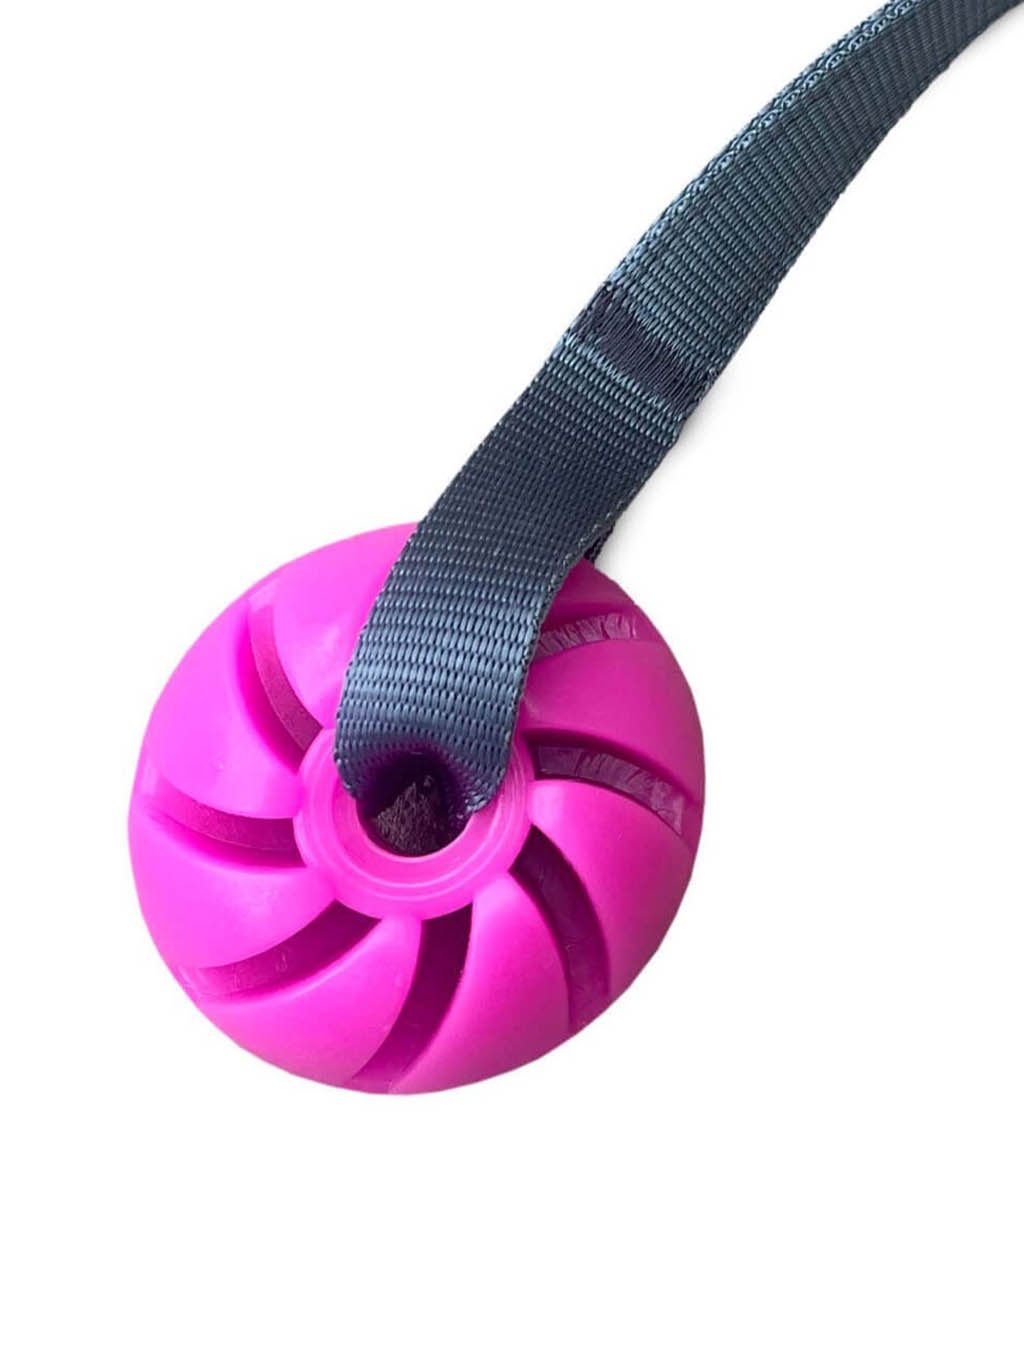 Růžový plovoucí míček 5 cm s tlapkovanou ručkou 4dox